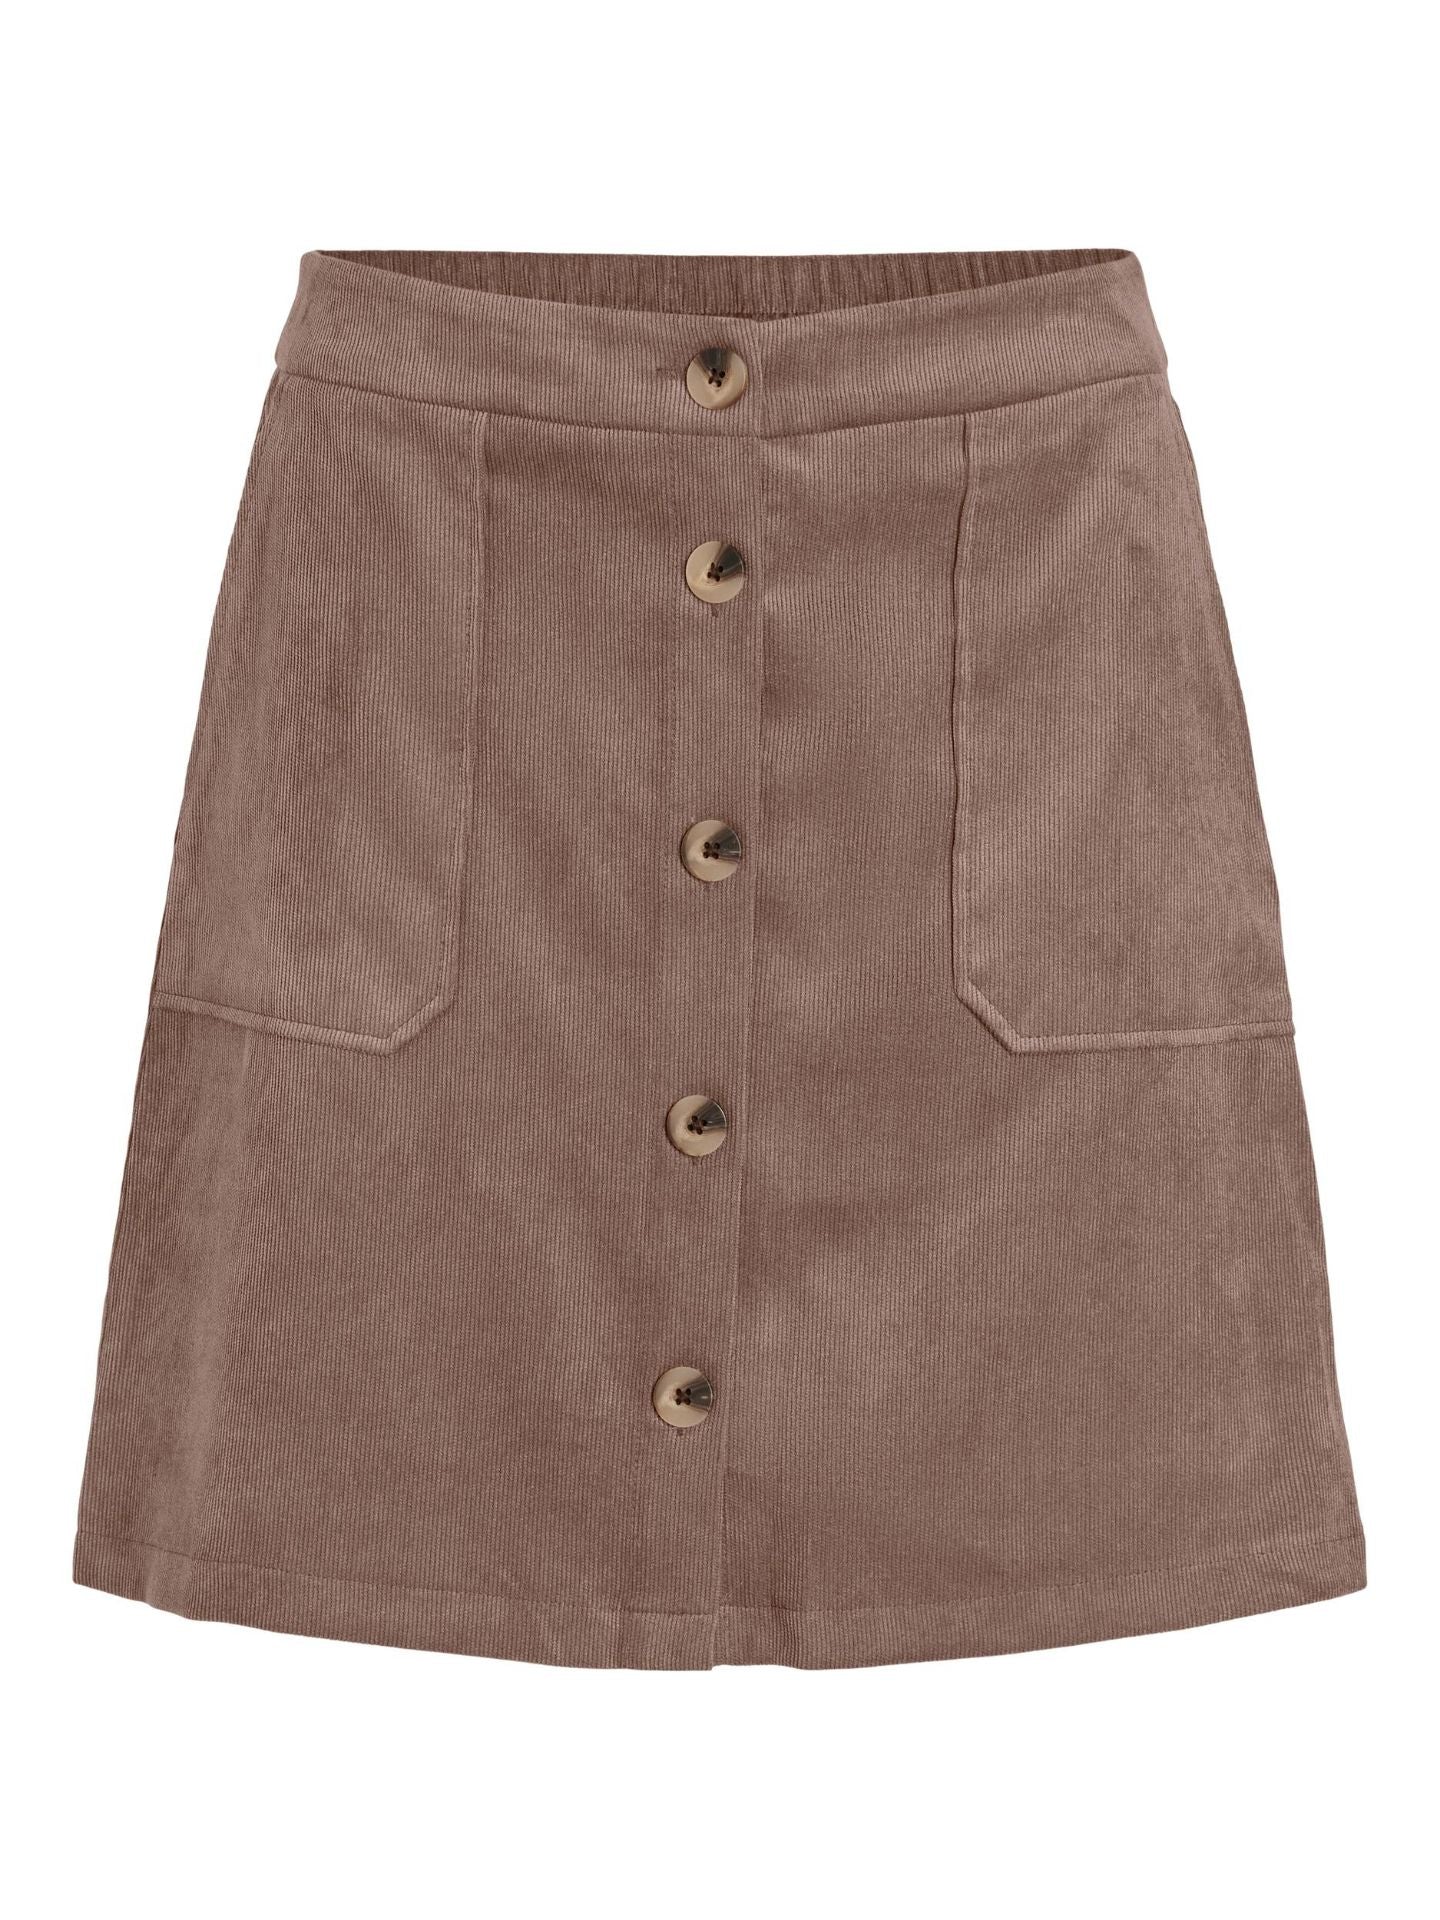 Vicourdie hw short skirt/PB